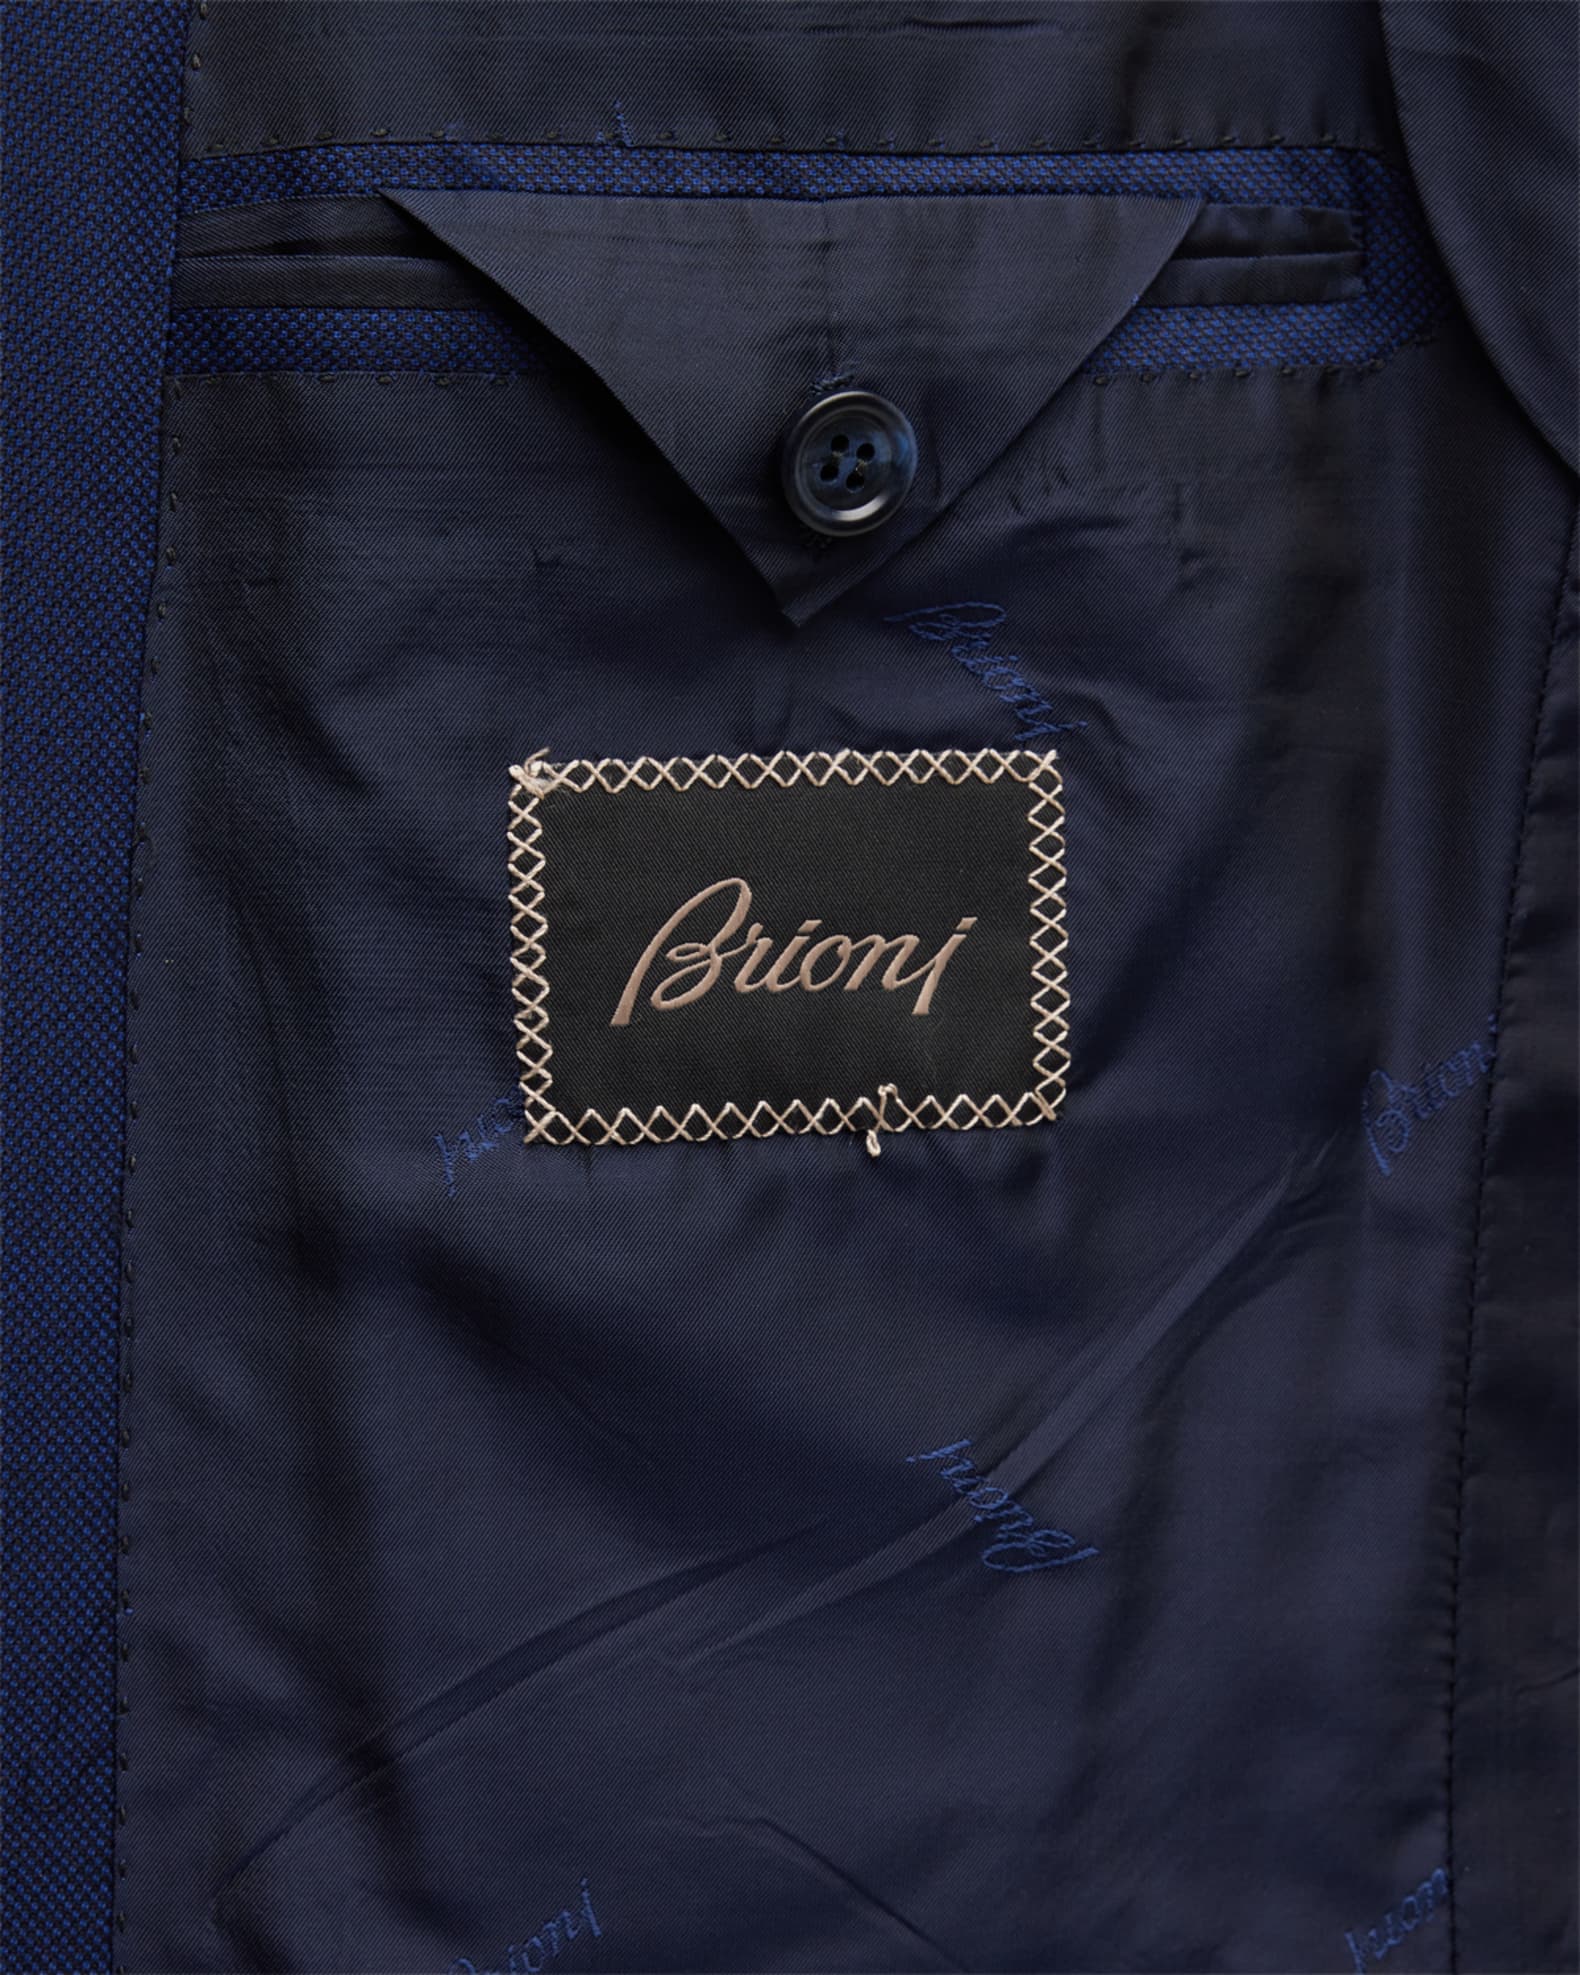 Brioni Men's Textured Solid Two-Piece Suit, Bright Navy | Neiman Marcus